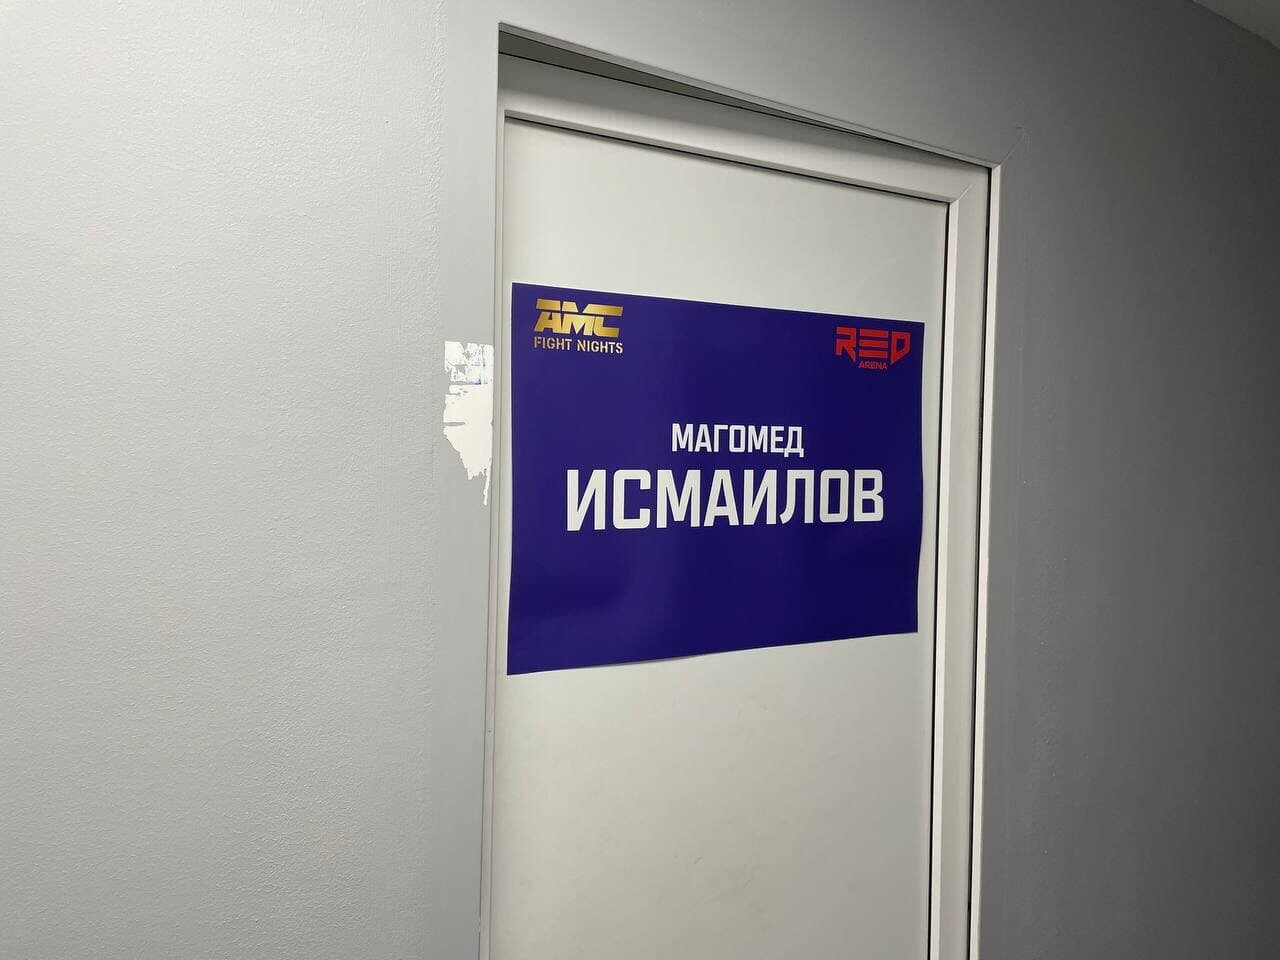 Владимир Минеев зрелищно победил Магомеда Исмаилова. Онлайн главного реванша в российских MMA